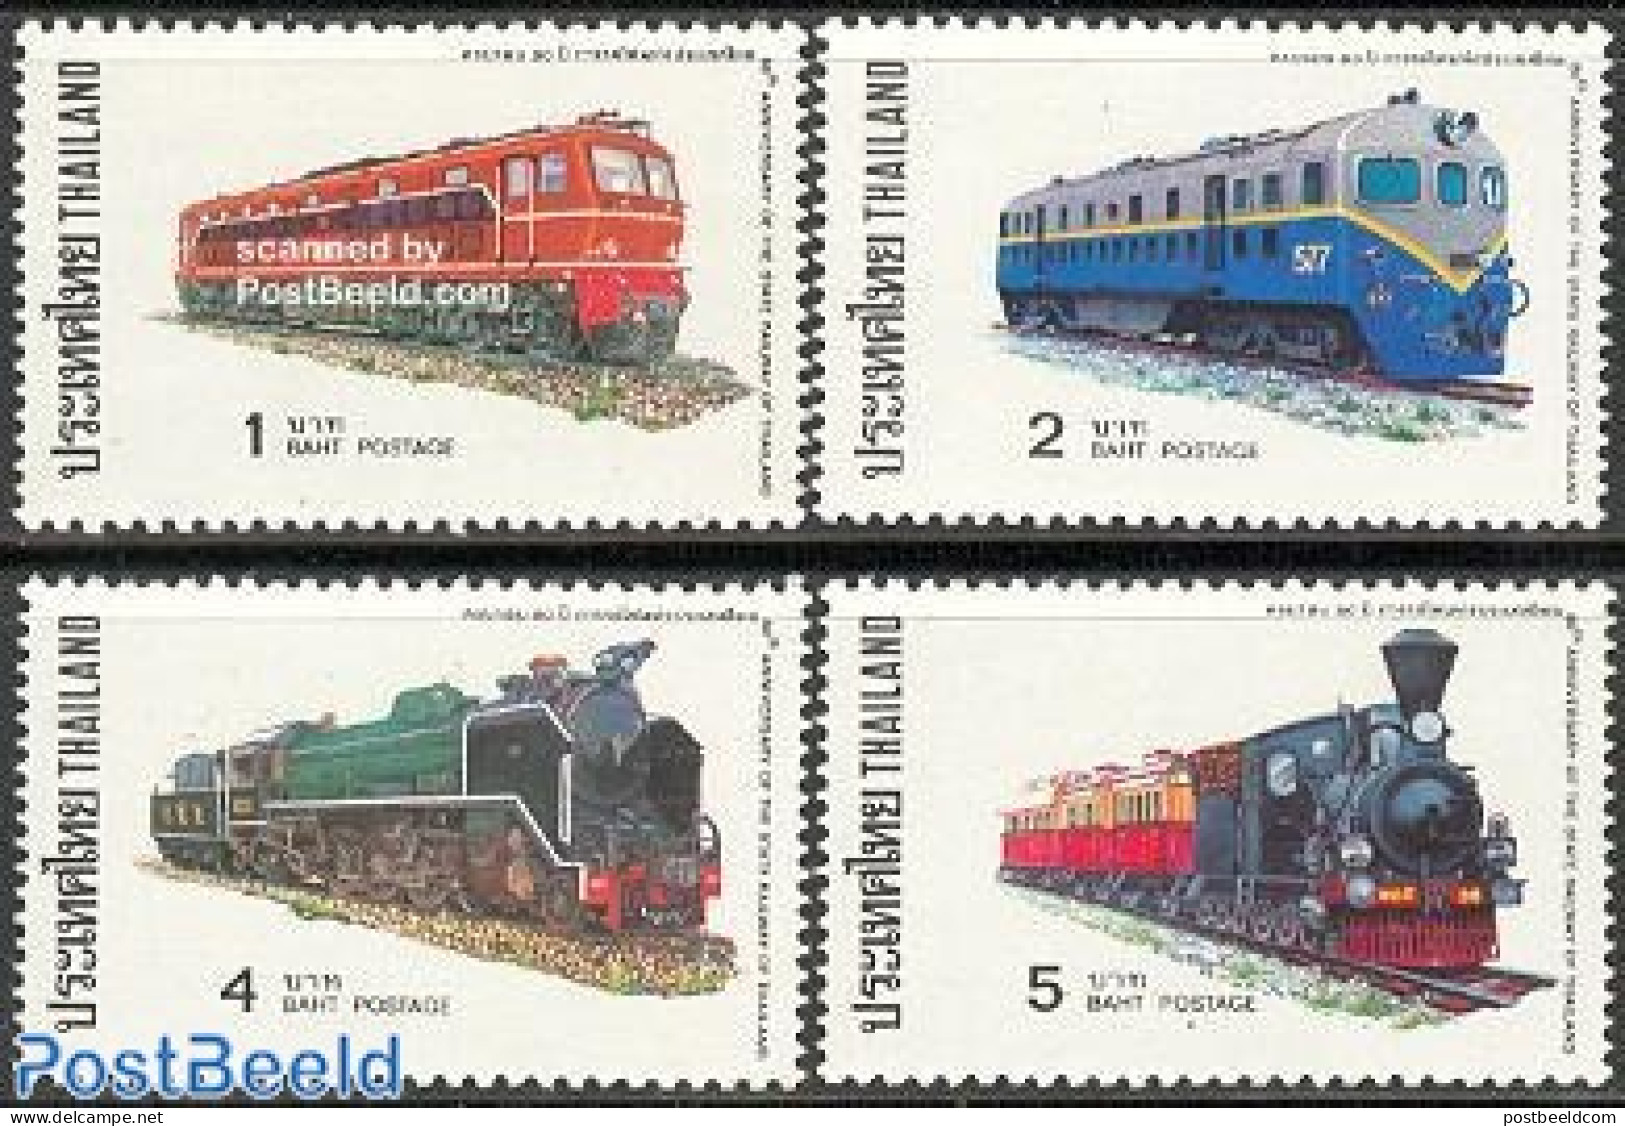 Thailand 1977 Railways 4v, Mint NH, Transport - Railways - Trains